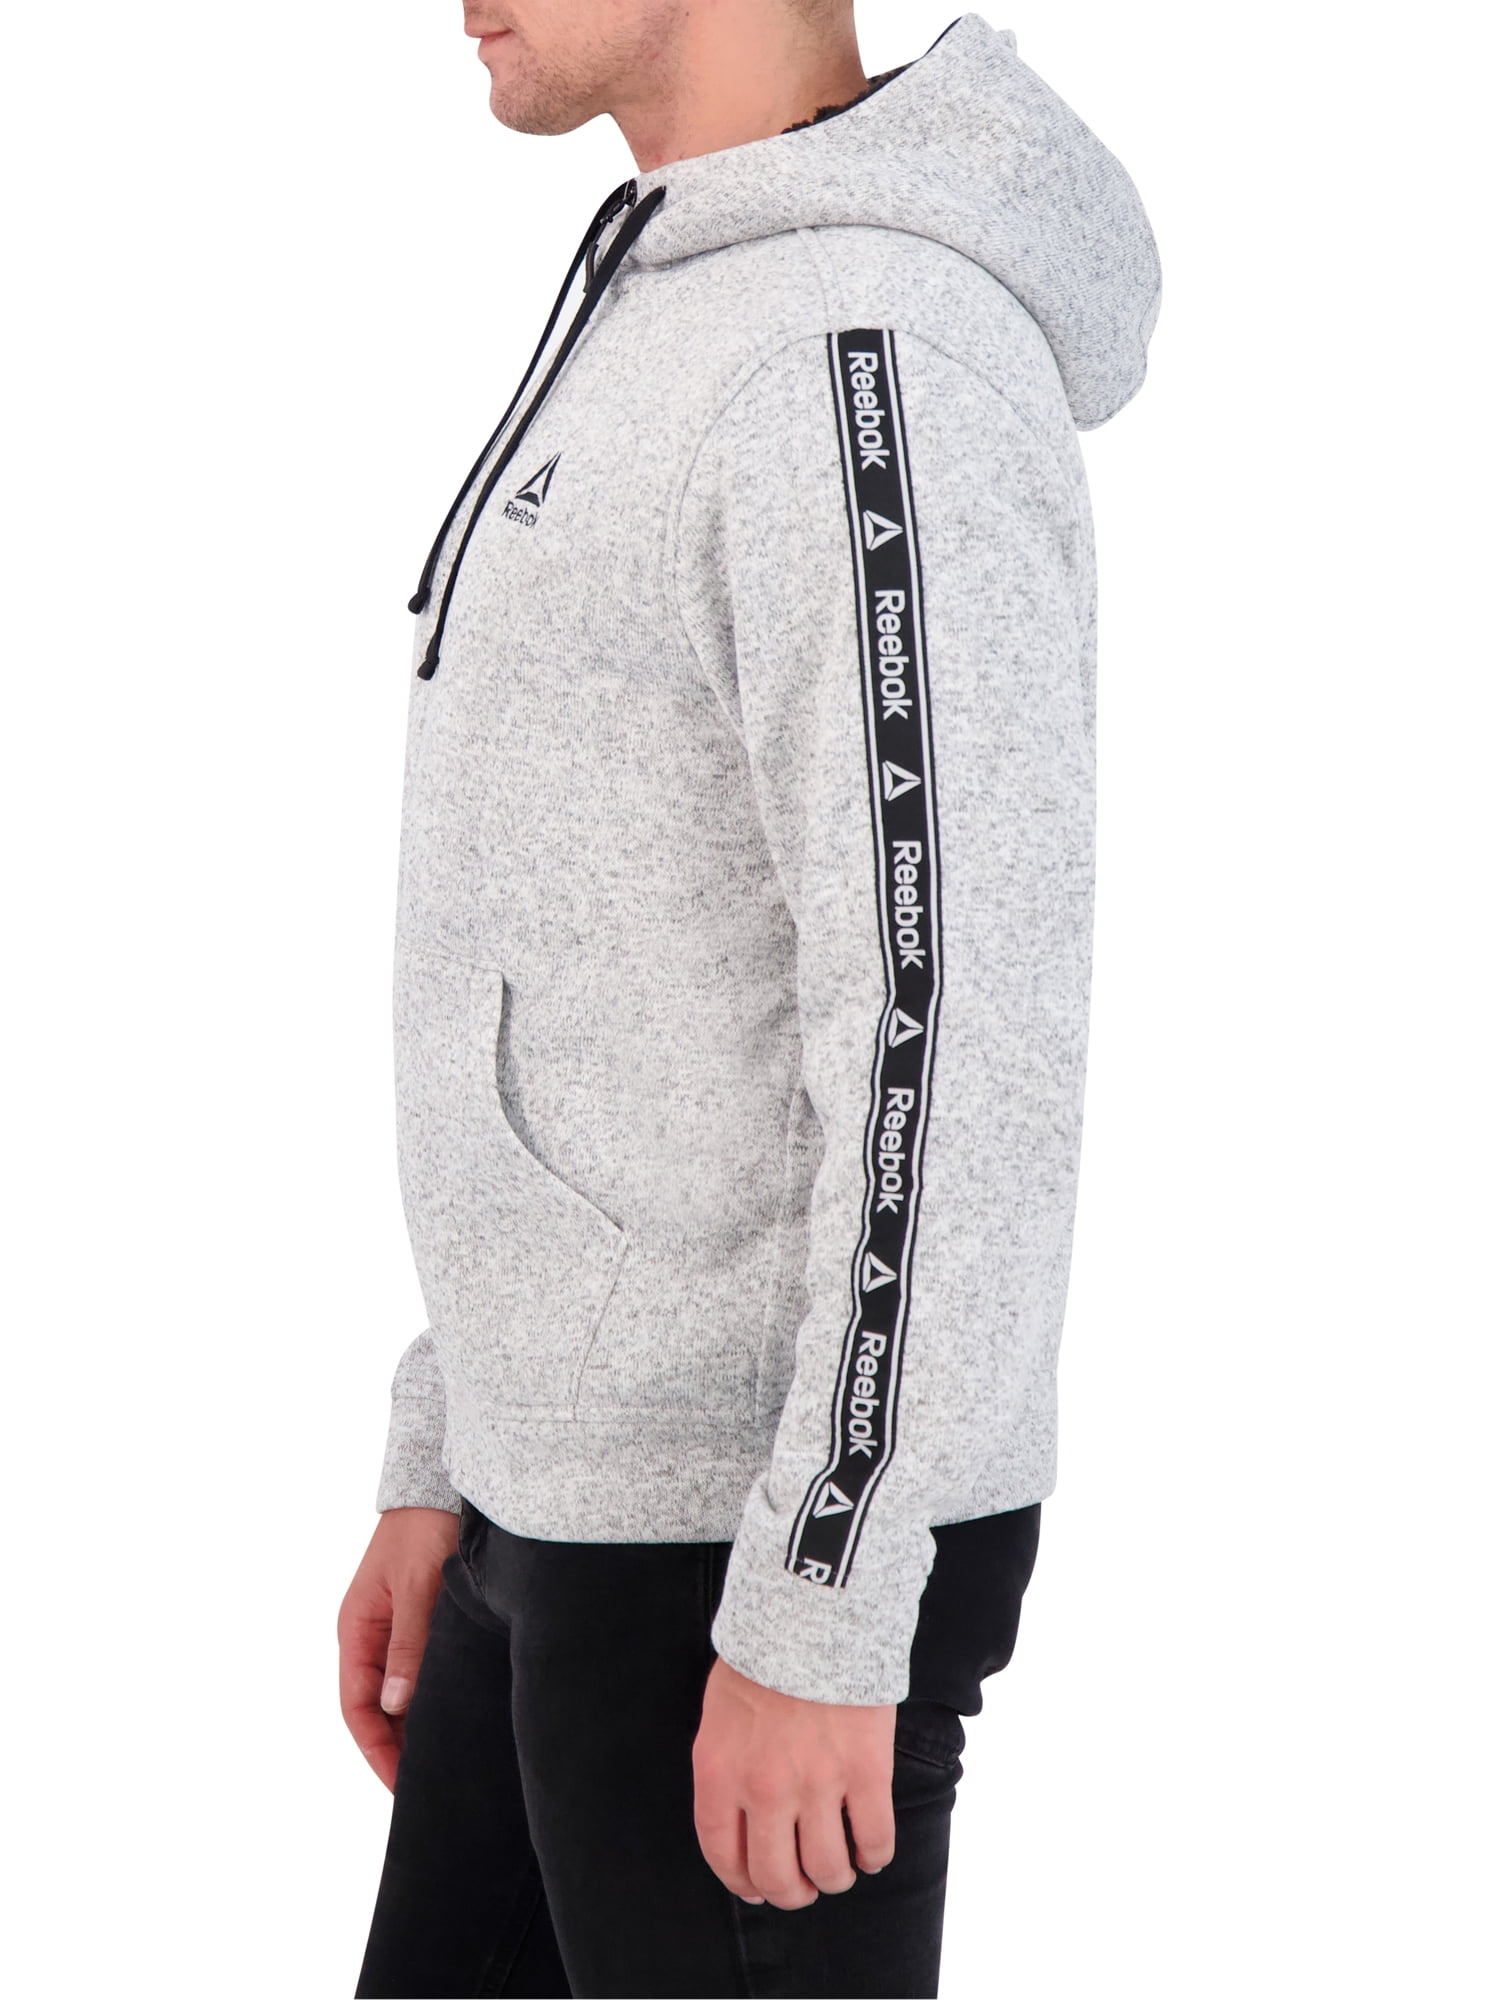 Reebok Men's Hooded Sweater Jacket, Up to Size 2XL Walmart.com